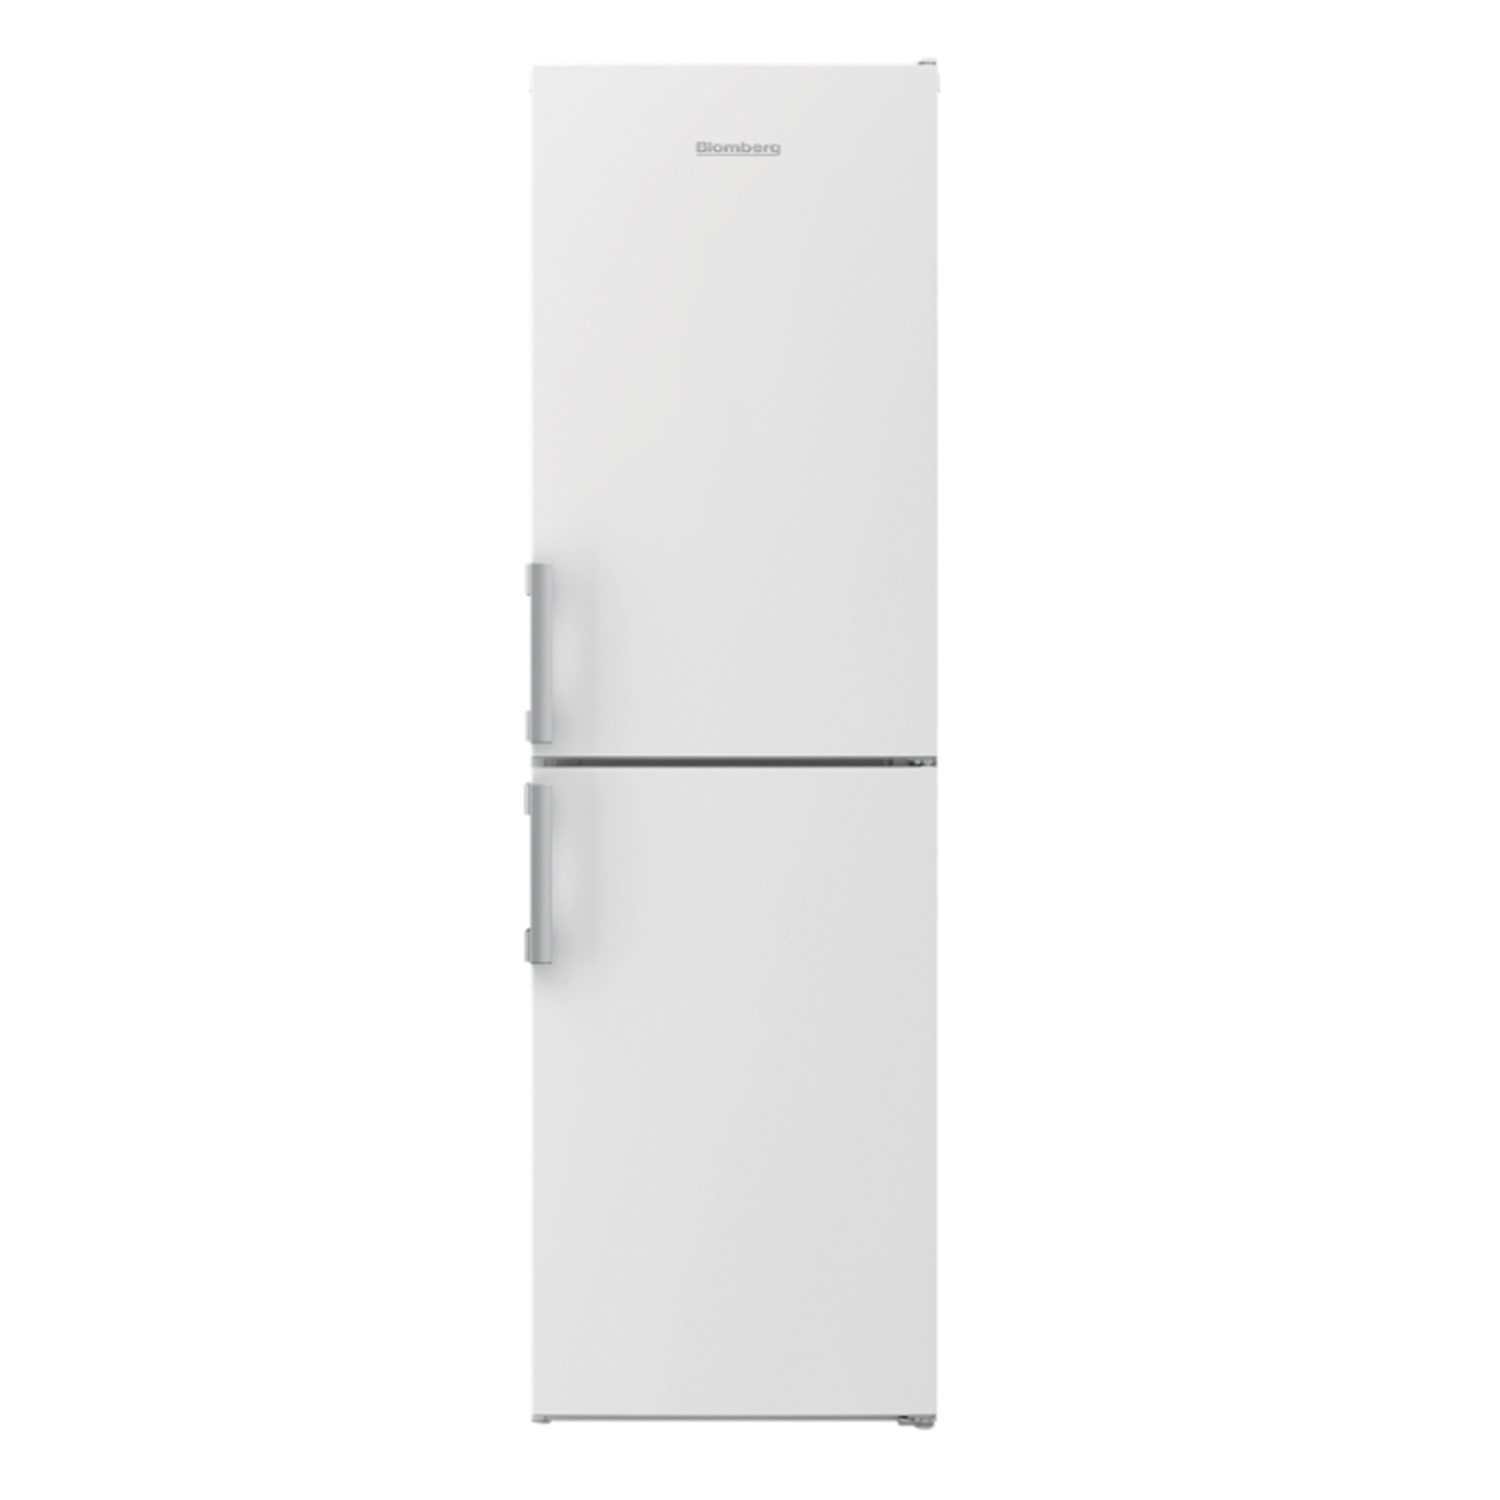 Blomberg KGM4553 54cm Fridge Freezer - White - Frost Free - 0